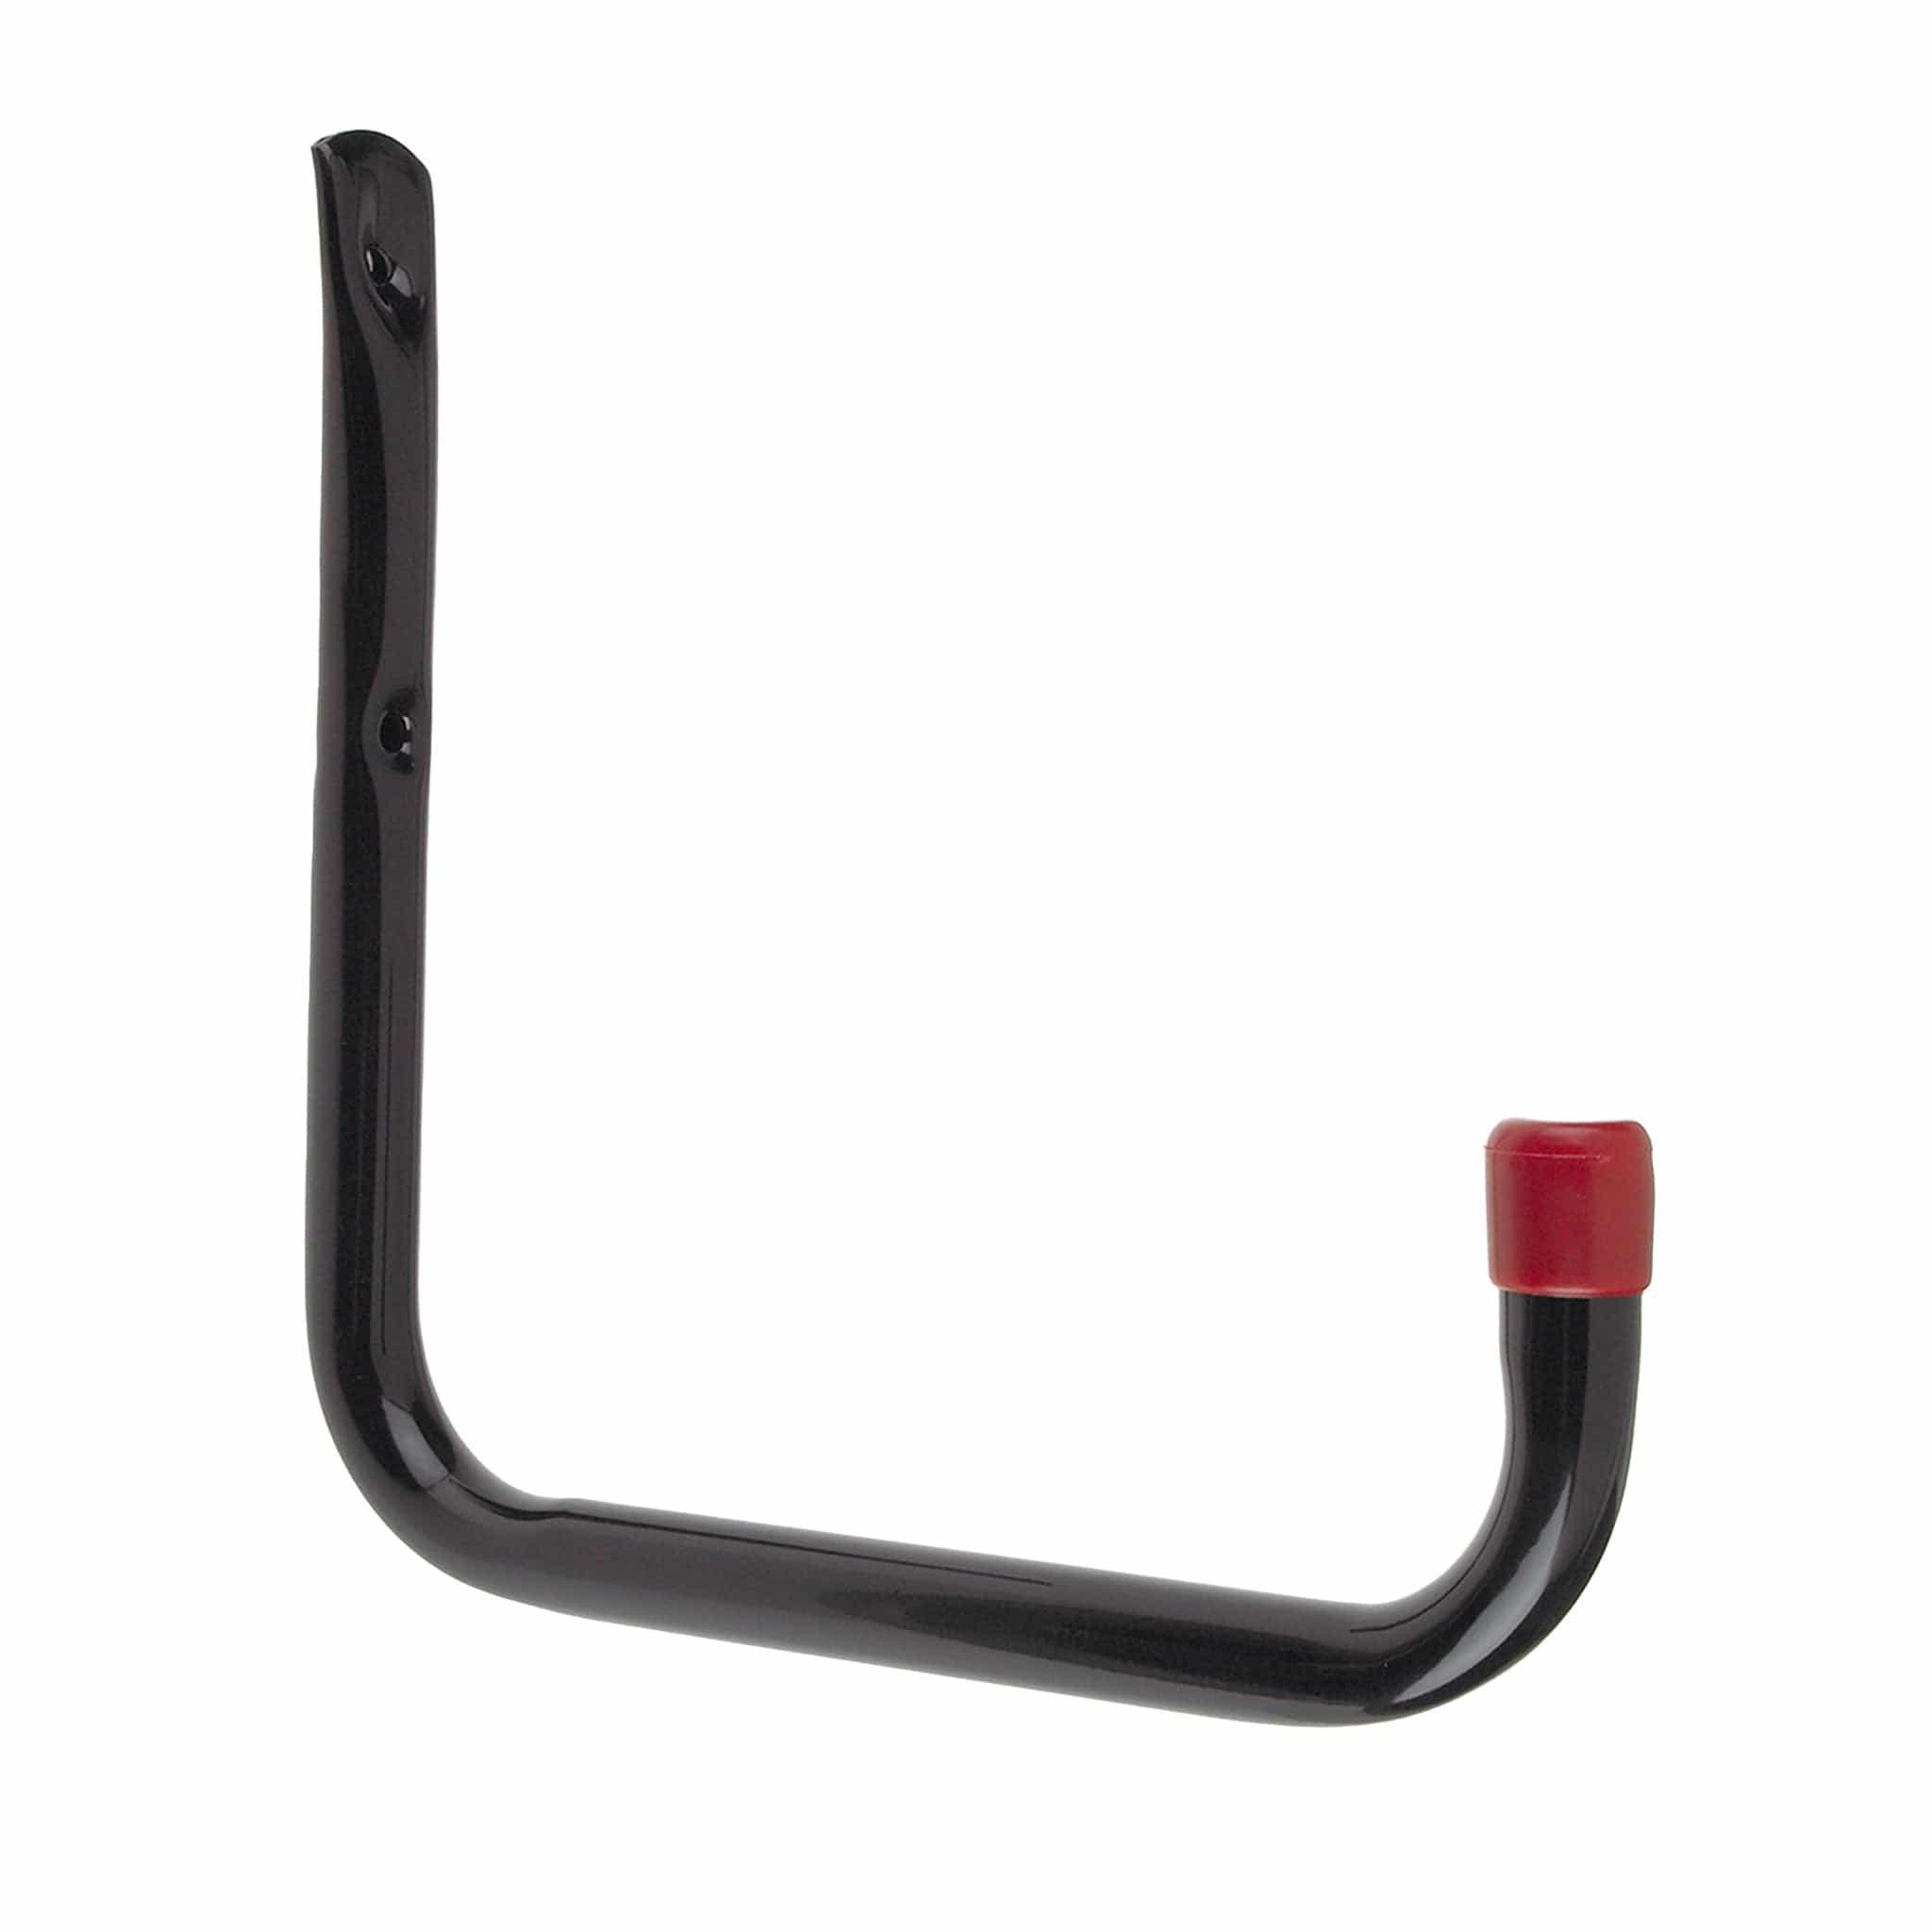 190mm Tubular  Hook With Red Vinyl Cap › Rothley